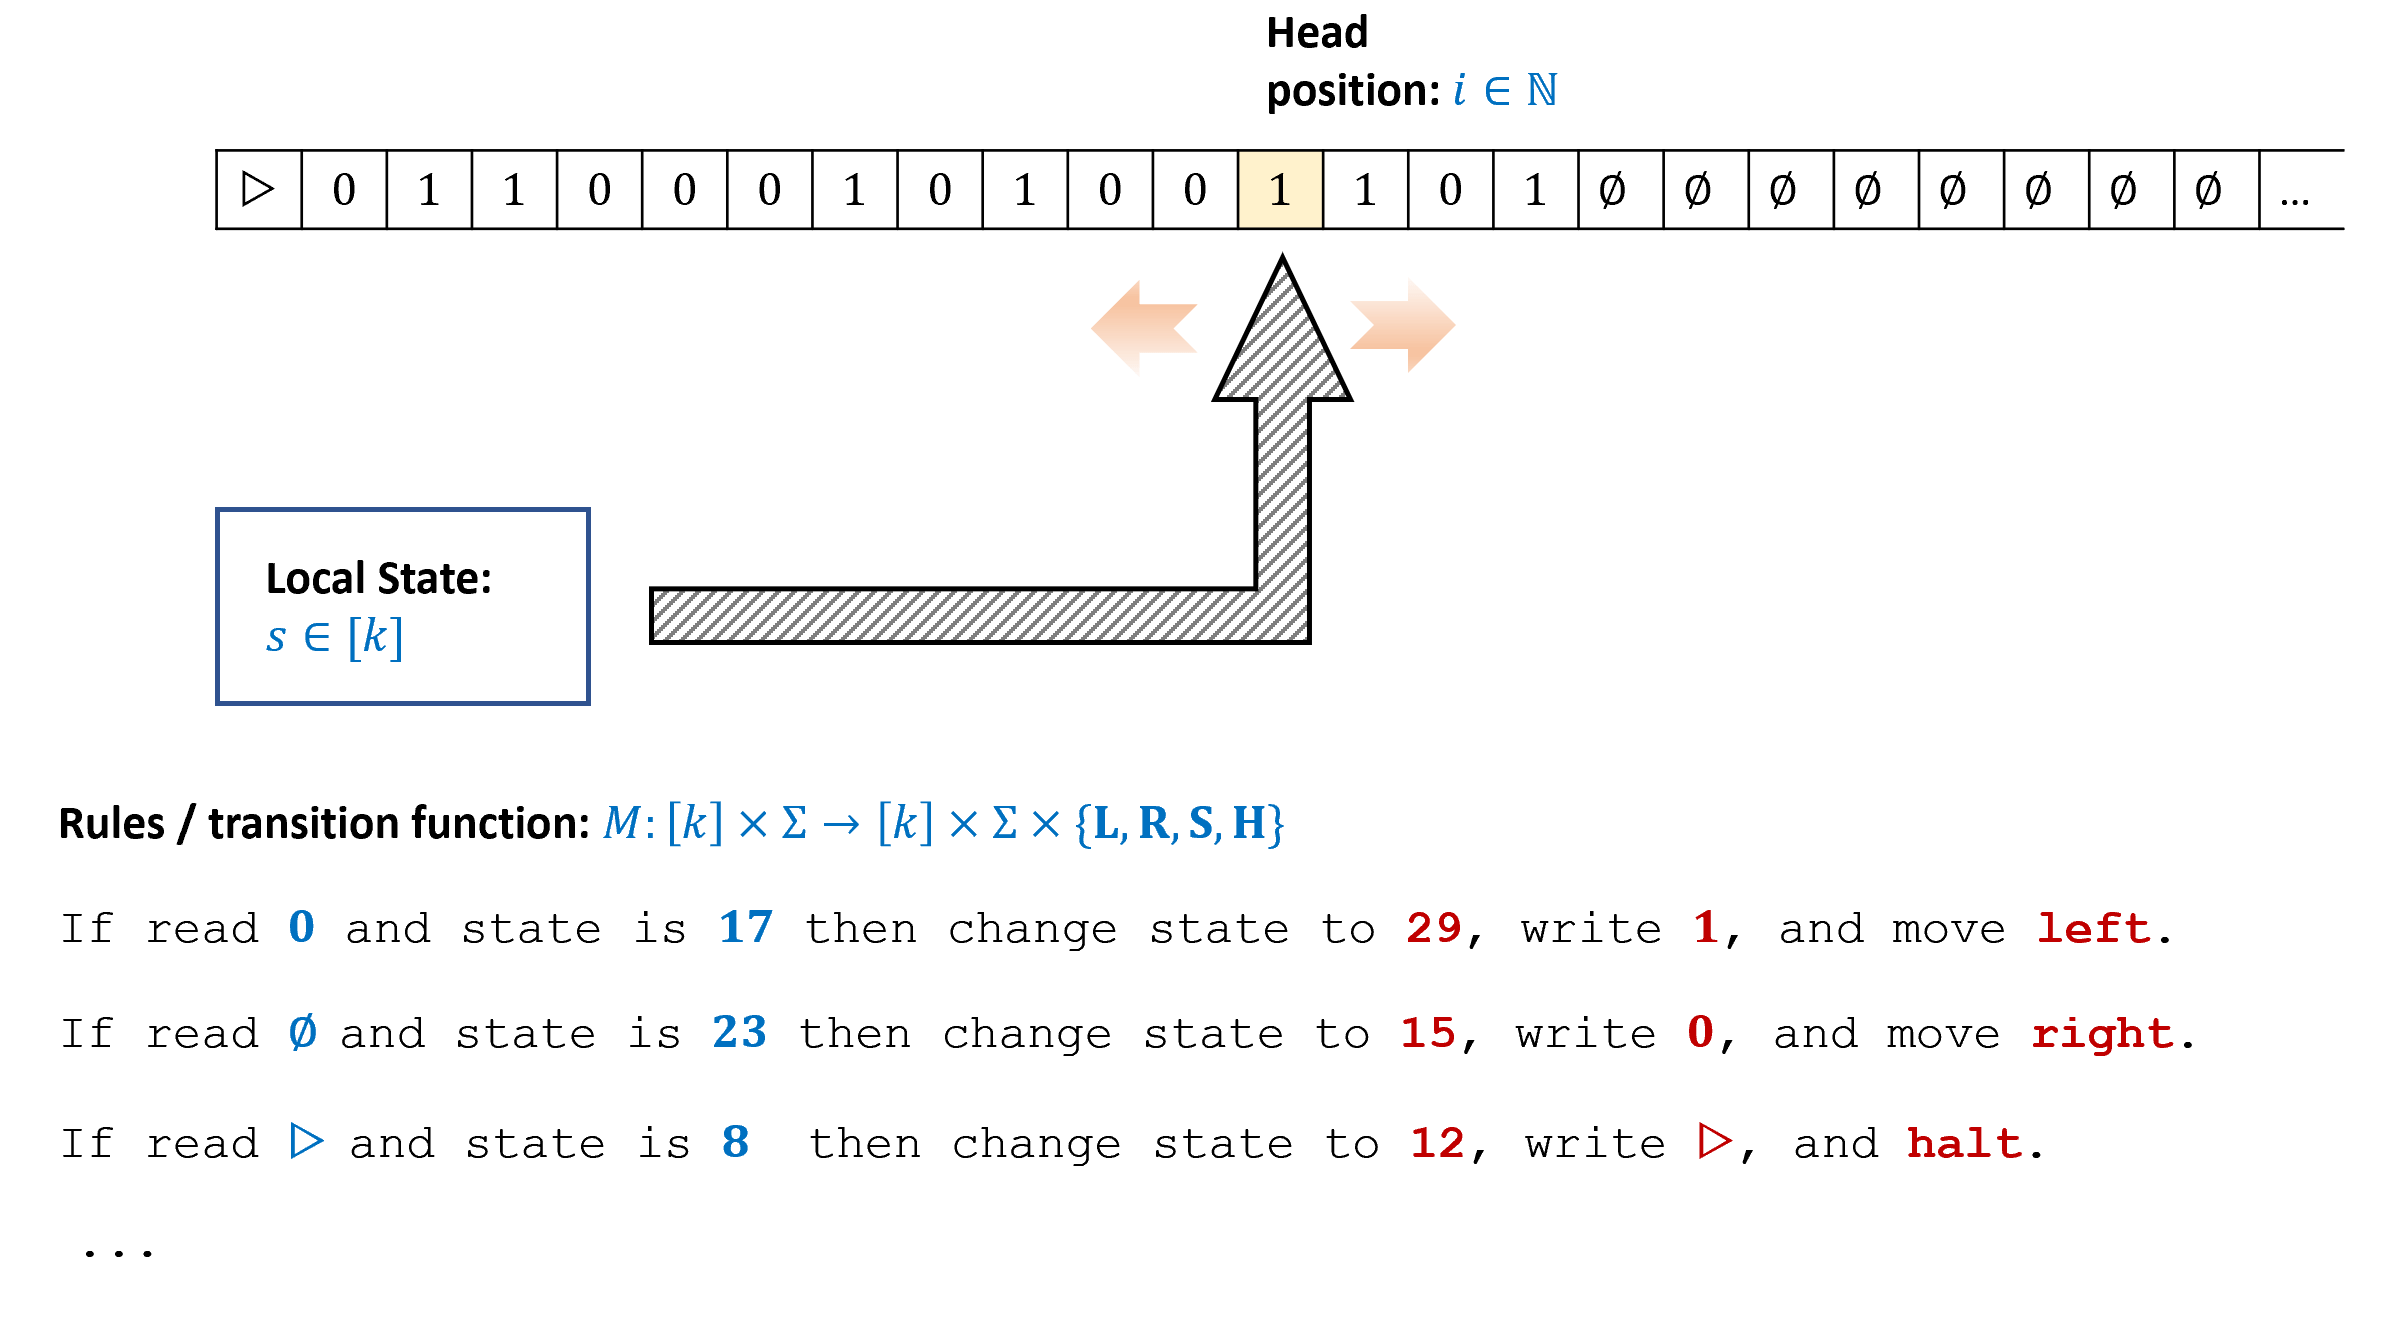 Turing Machine Programming Techniques (Part 1) 